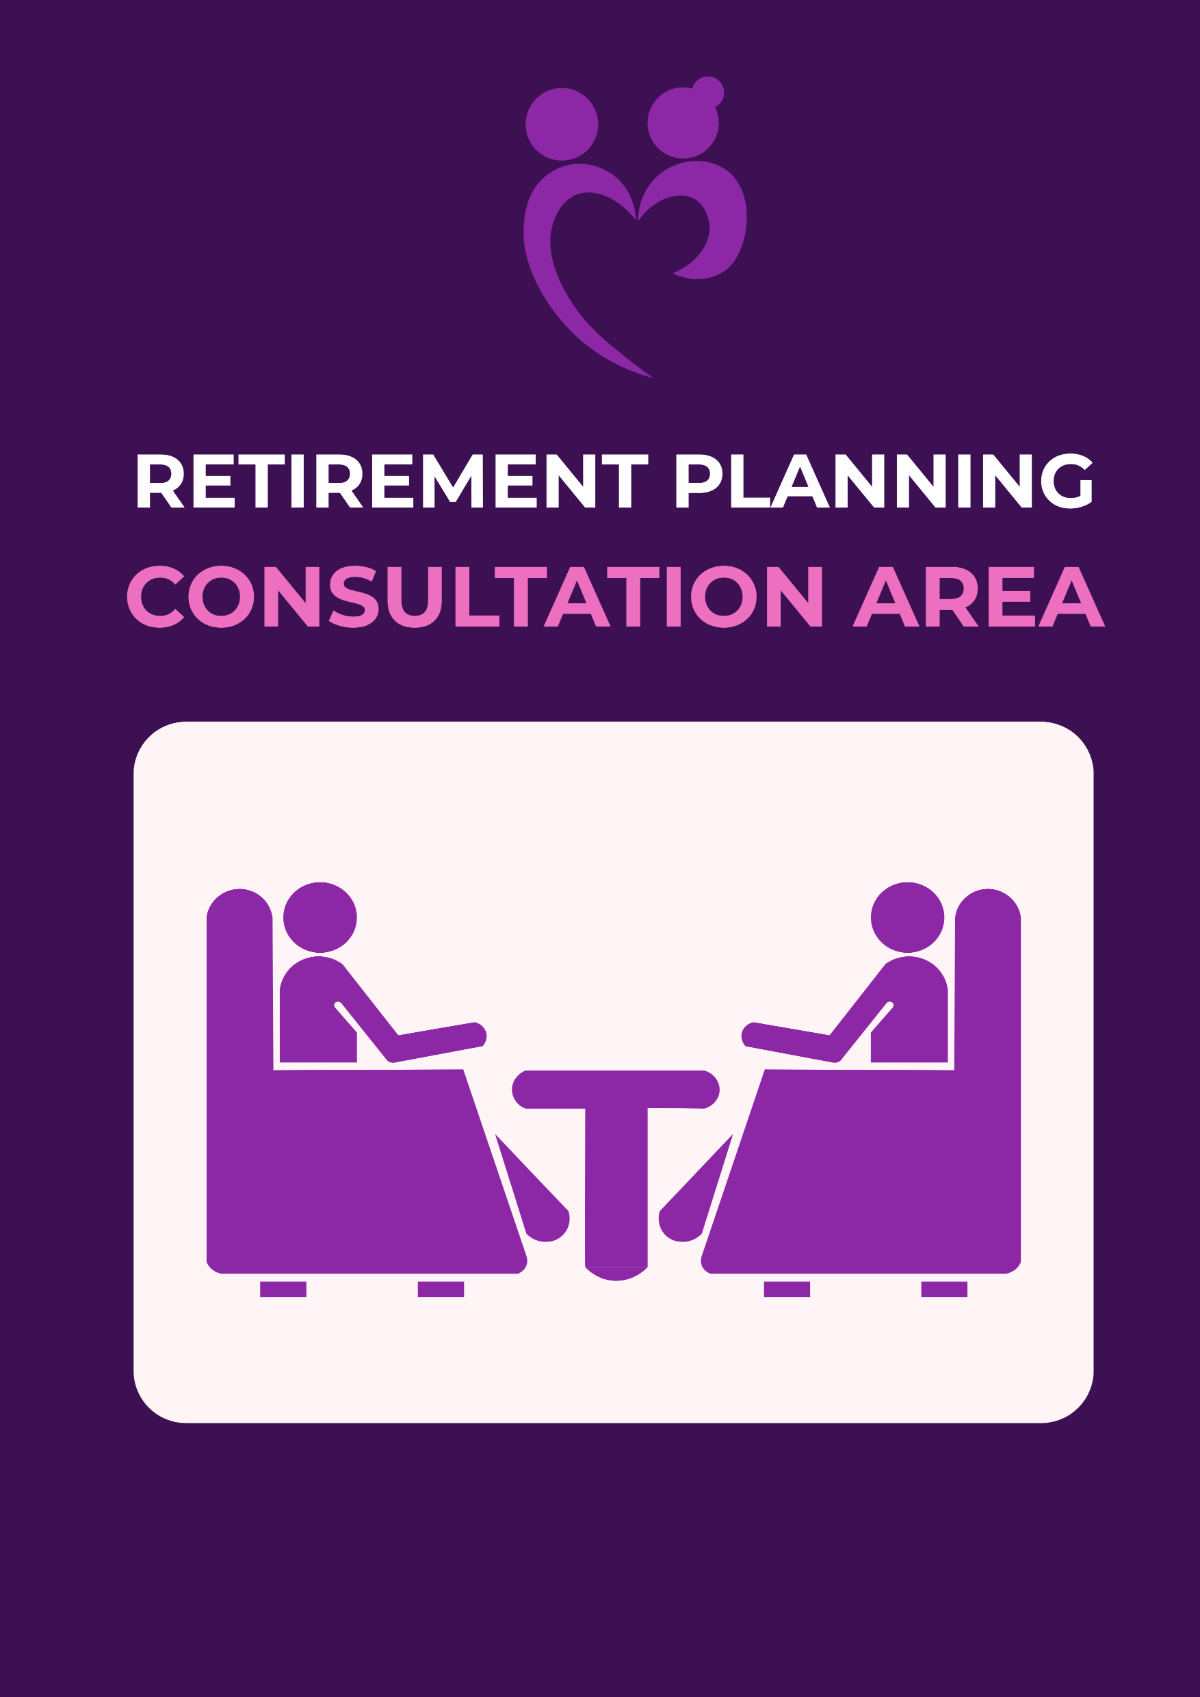 Retirement Planning Consultation Area Signage Template